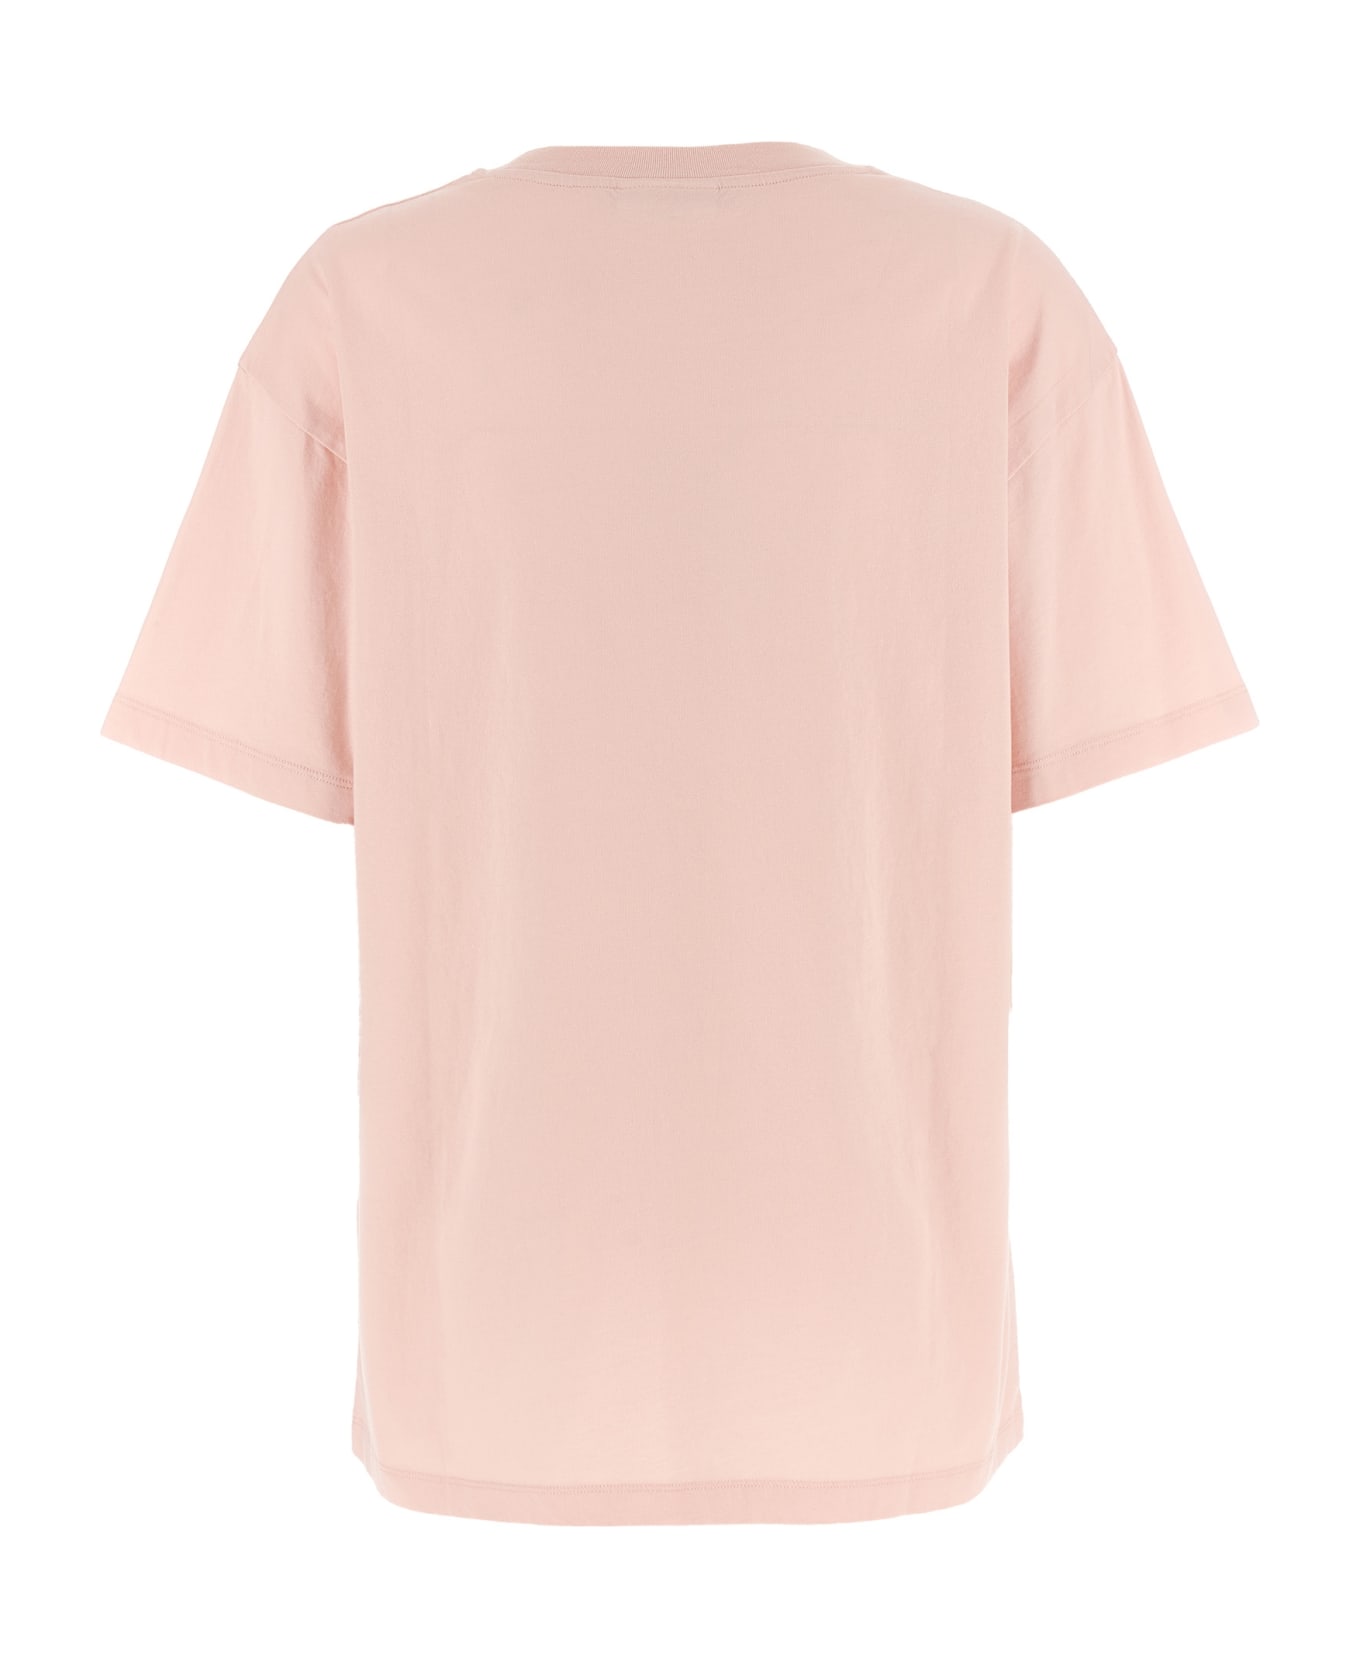 Maison Kitsuné 'surfing Foxes' T-shirt - Pink Tシャツ